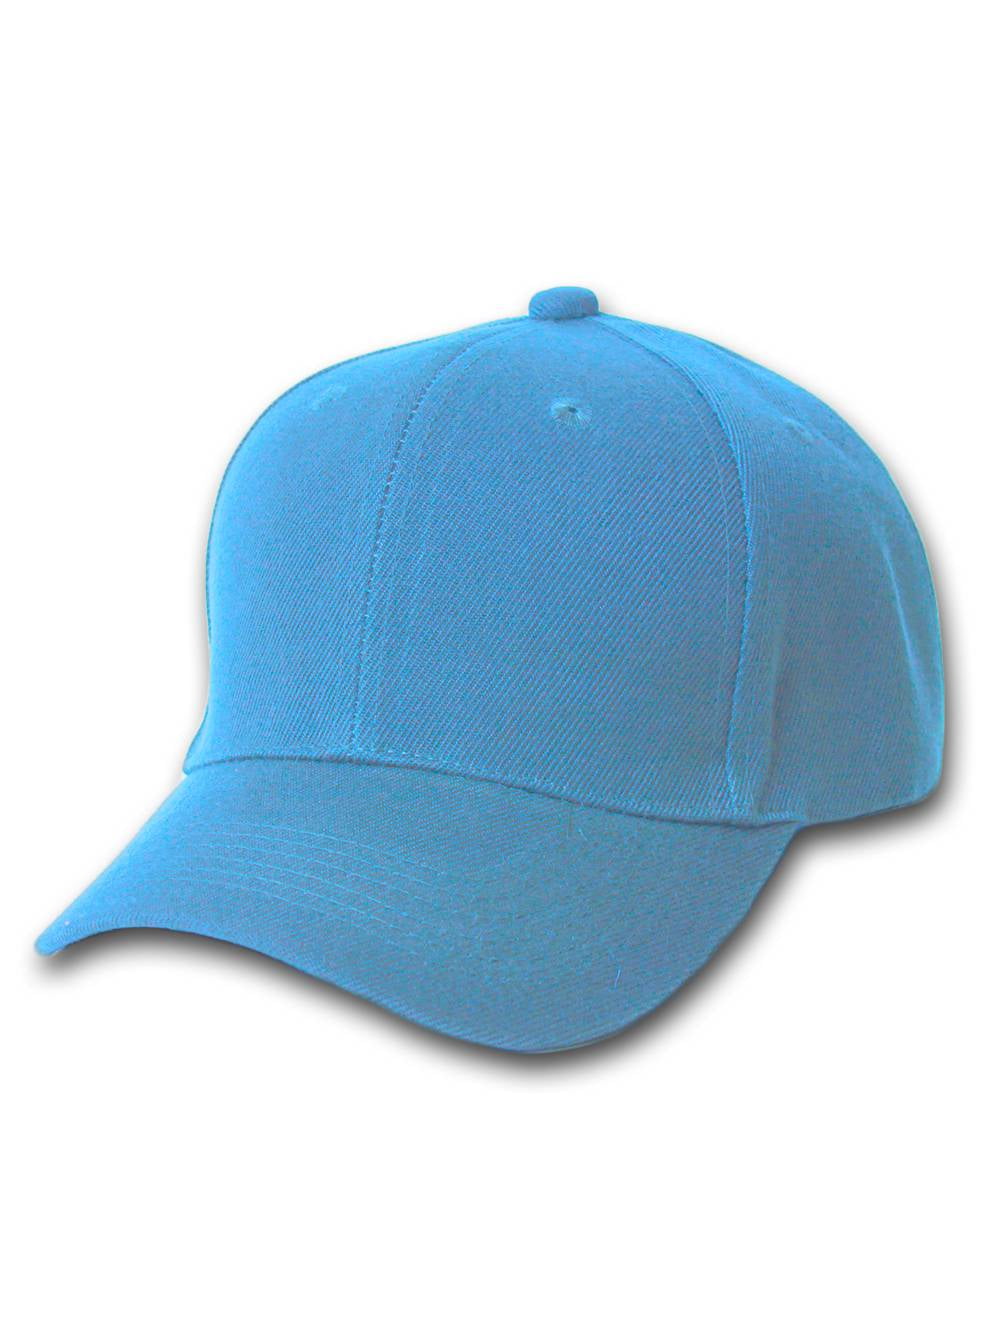 Blank / Plain Adjustable Baseball Cap / Hat - Sky / Baby Blue